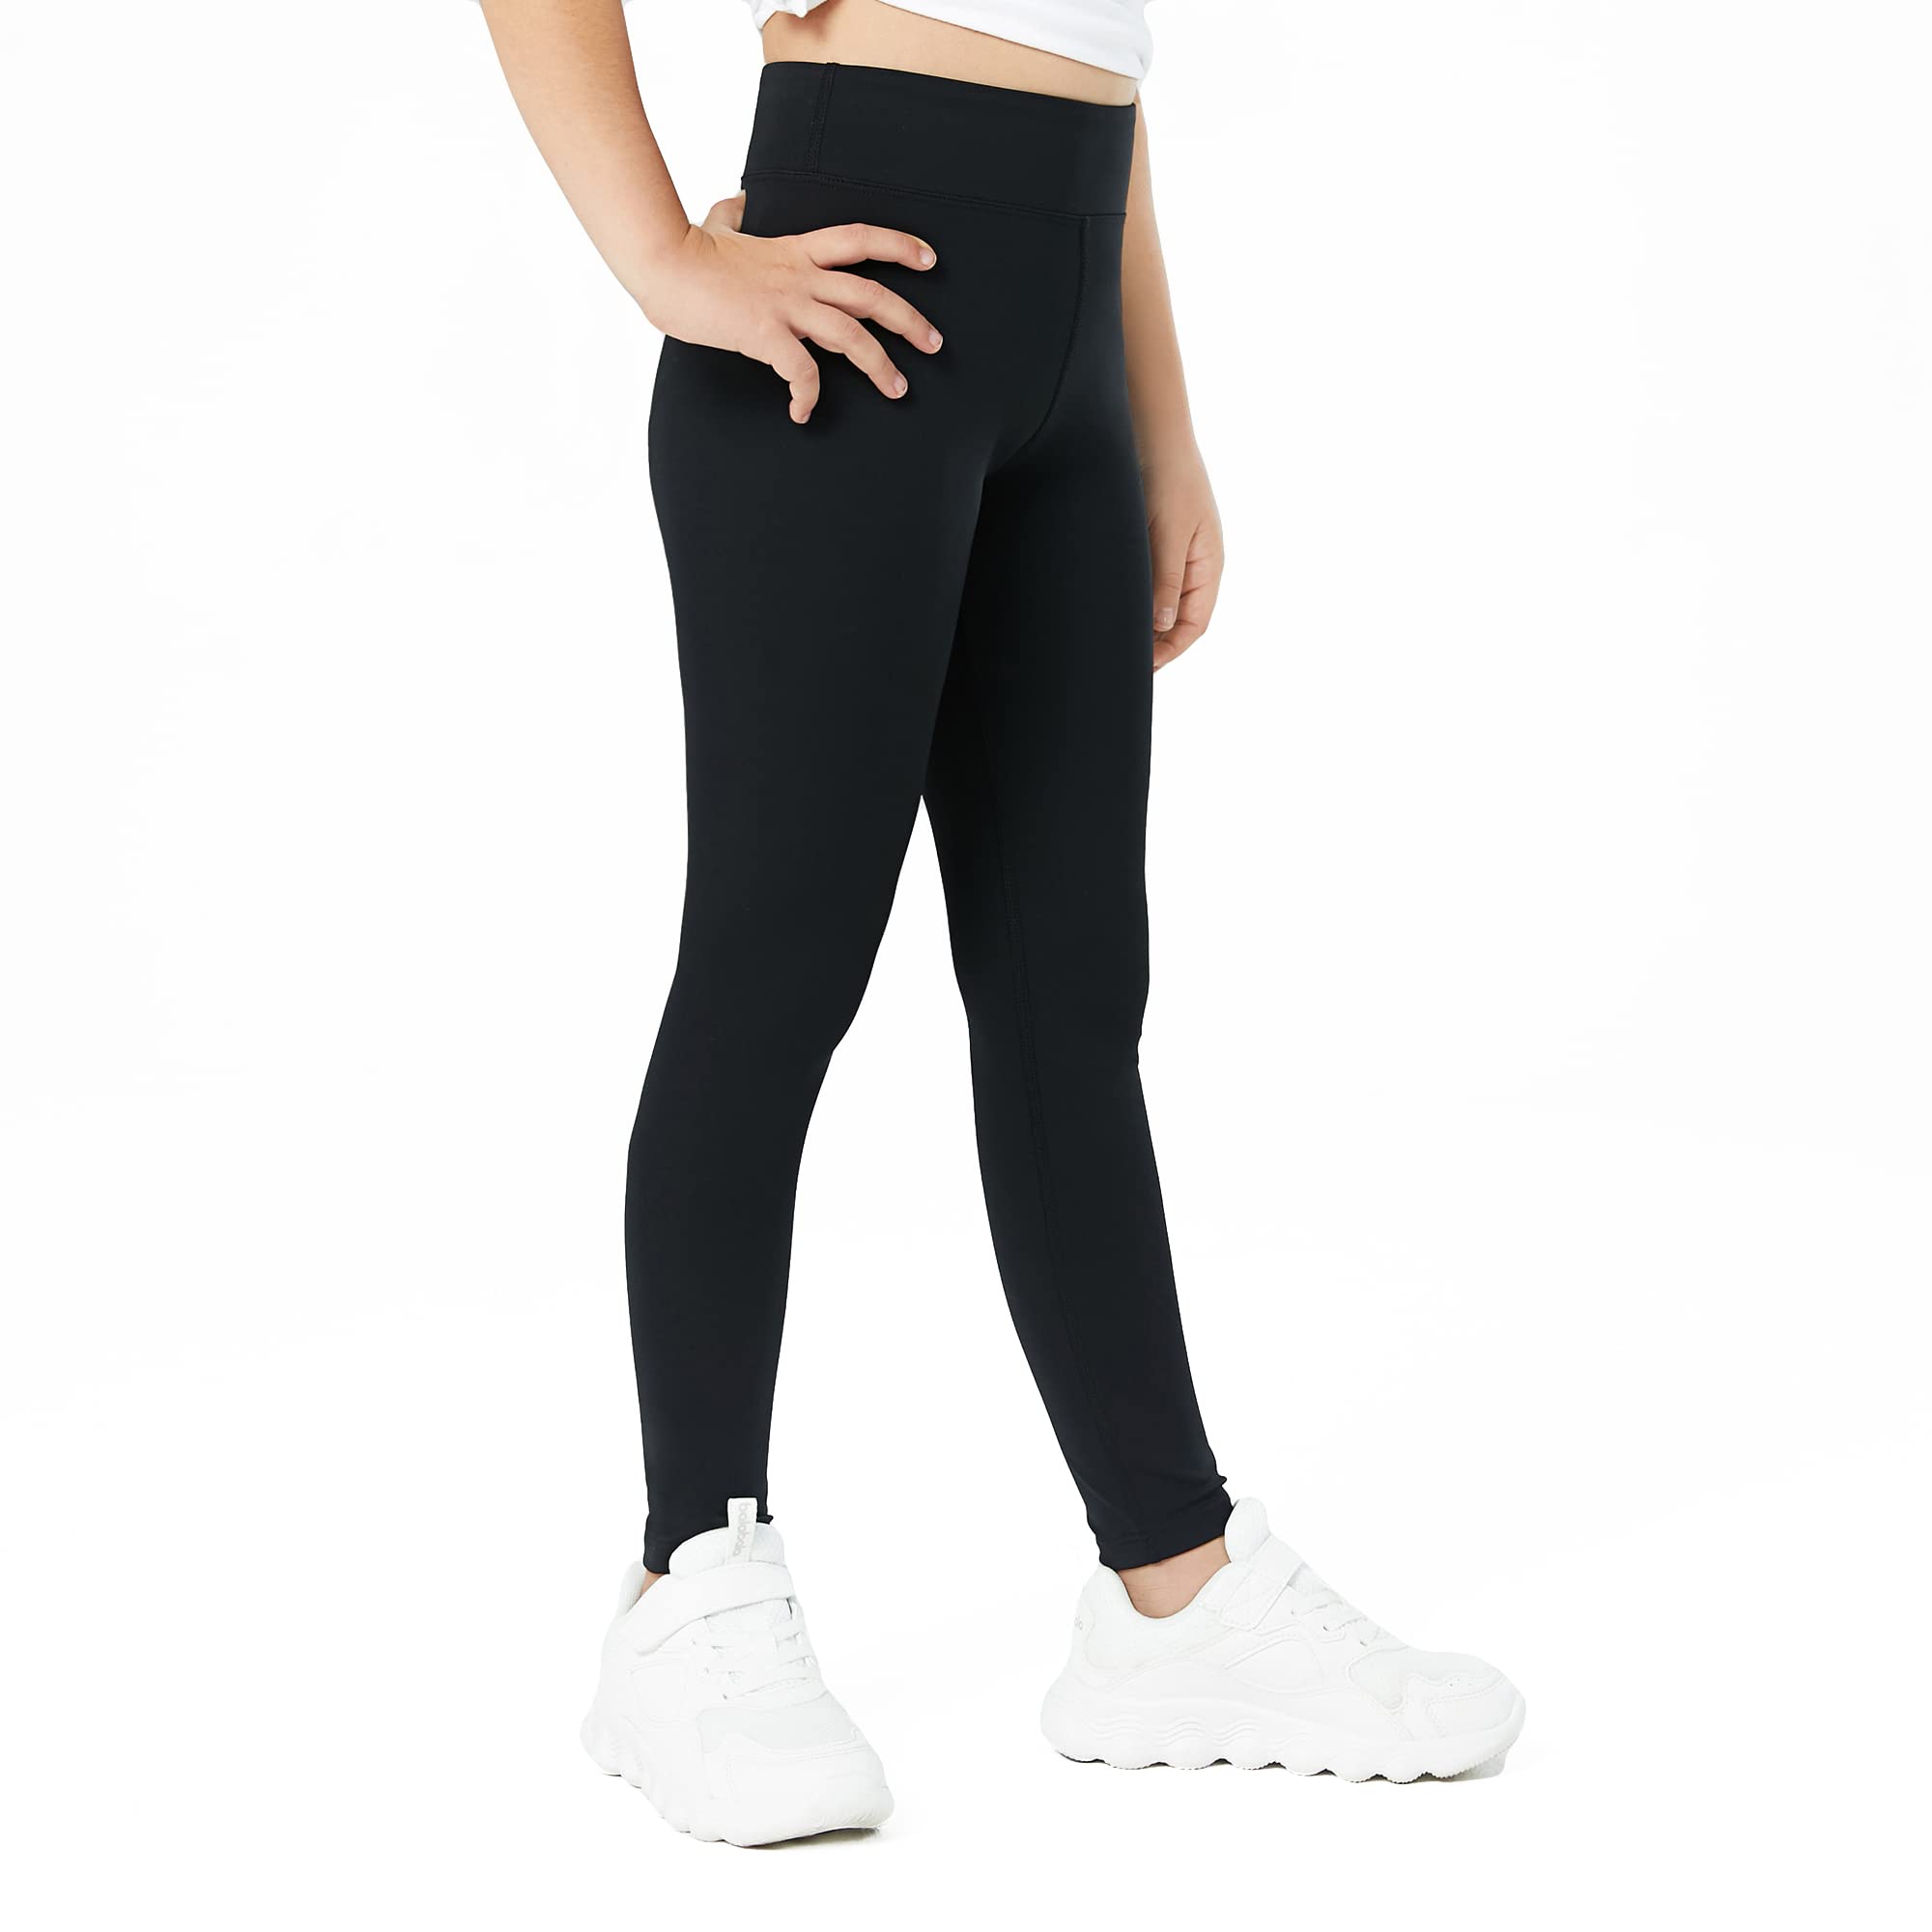 Nike Stitch Athletic Leggings for Women